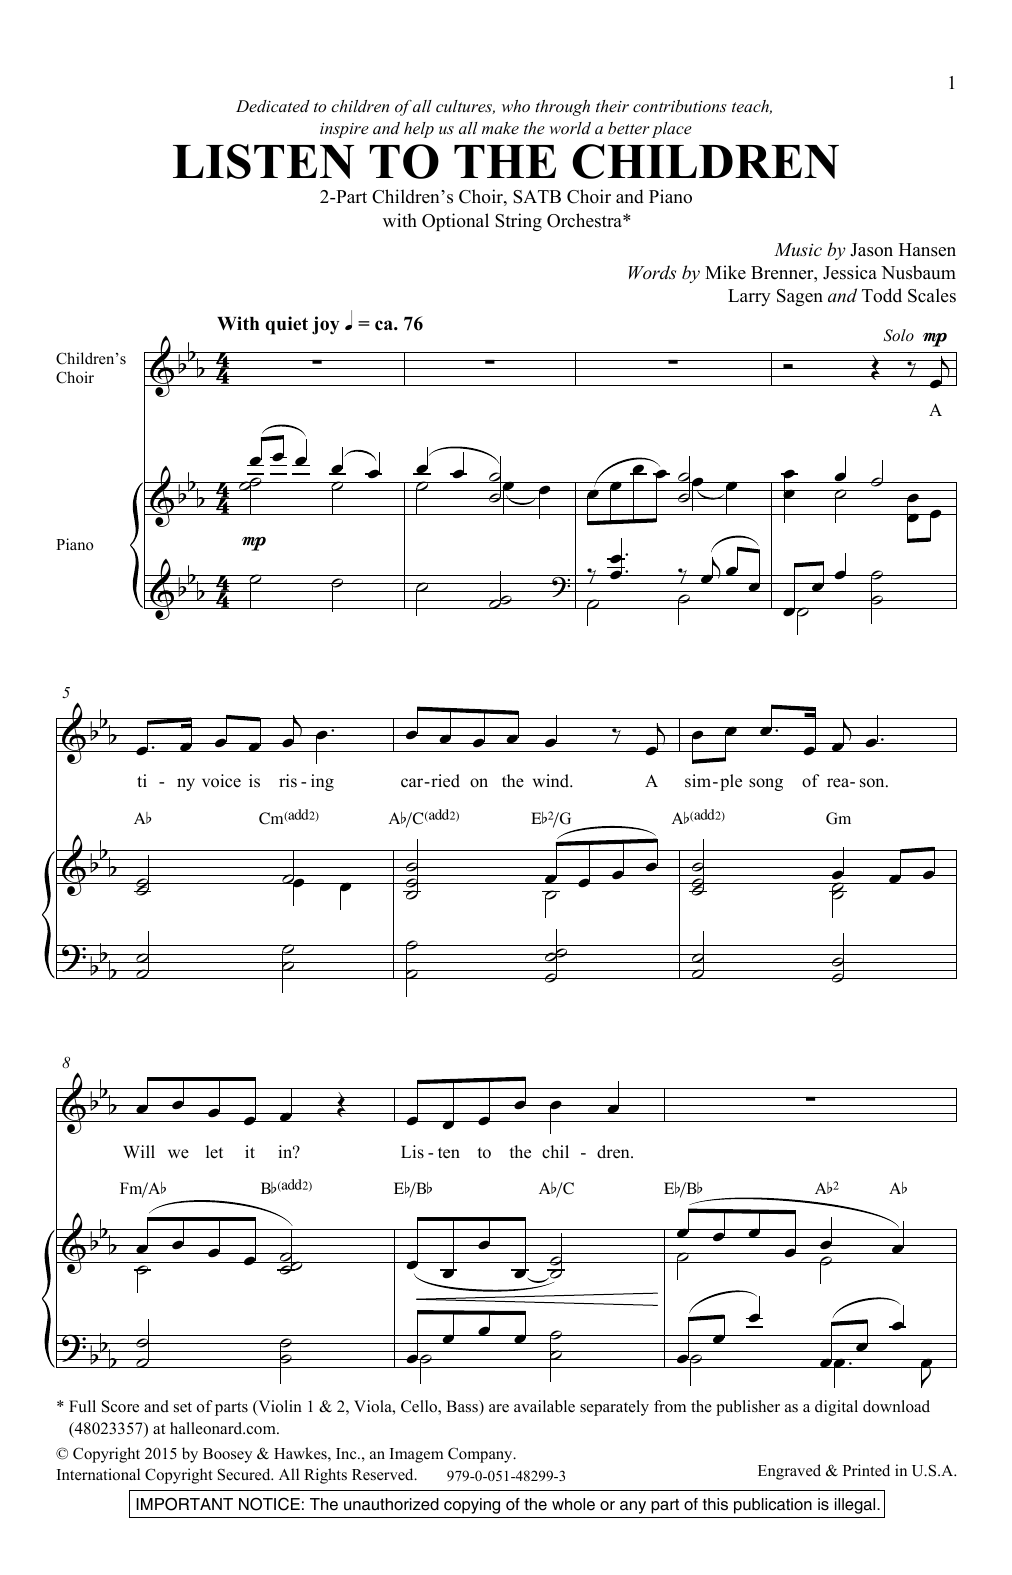 Jason Hansen Listen To The Children (SATB with Children's Choir) Sheet Music Notes & Chords for Choral - Download or Print PDF